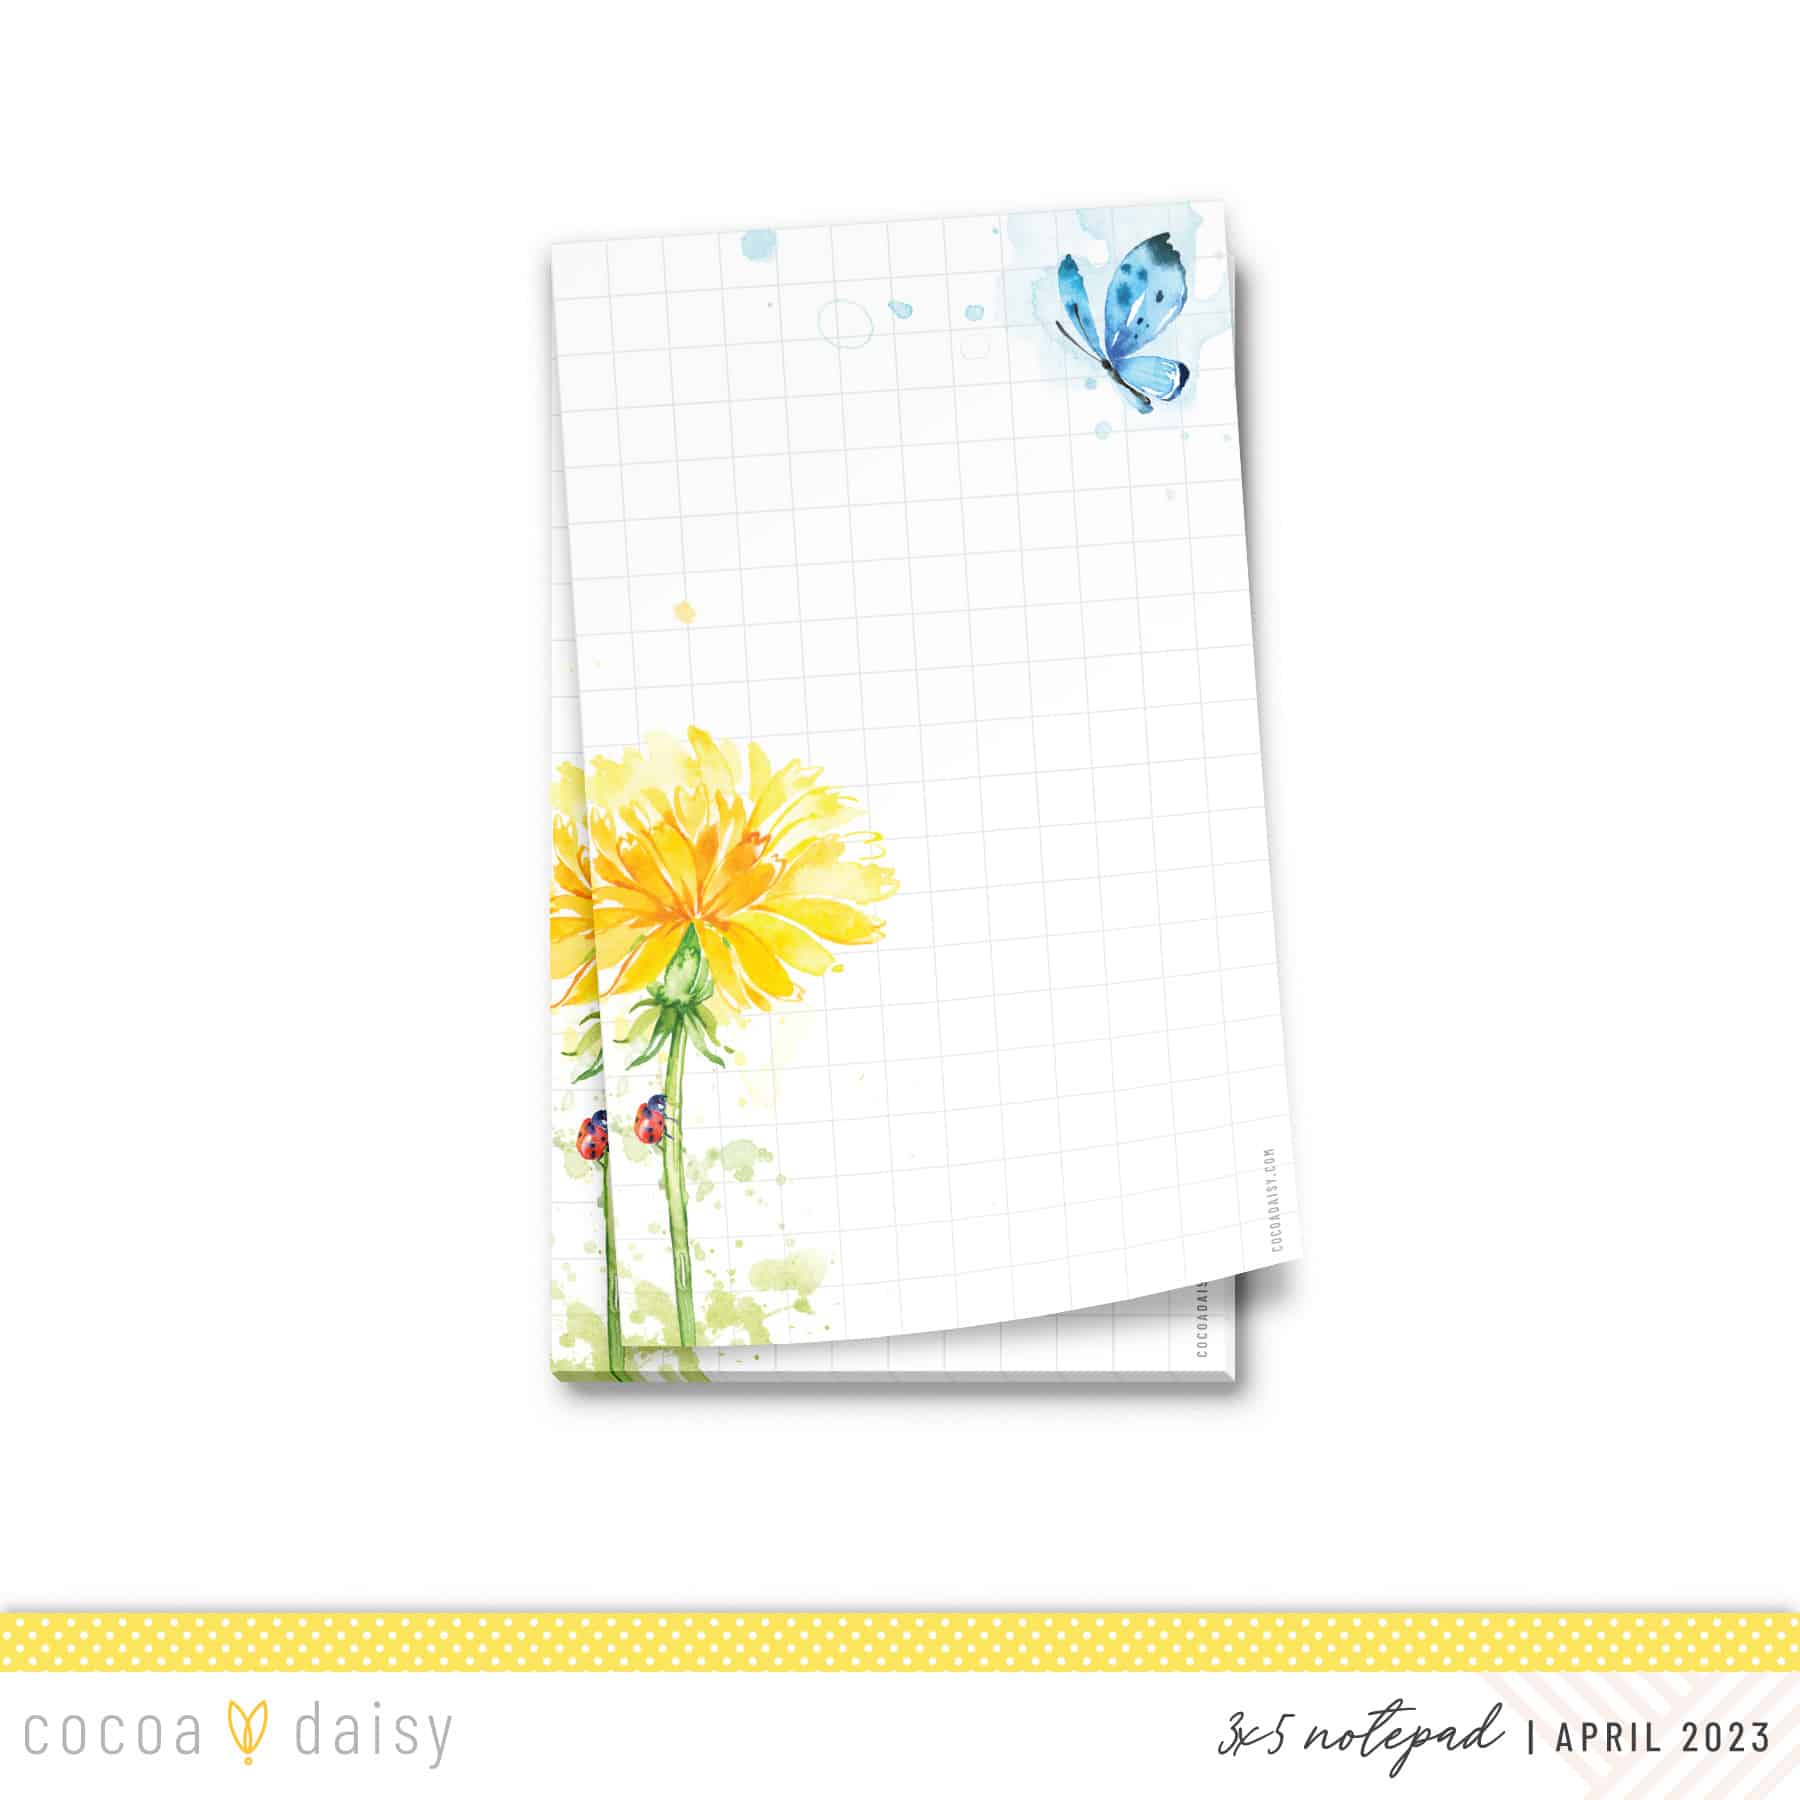 Dandelion-Wishes-Apr23-Notepad.jpg